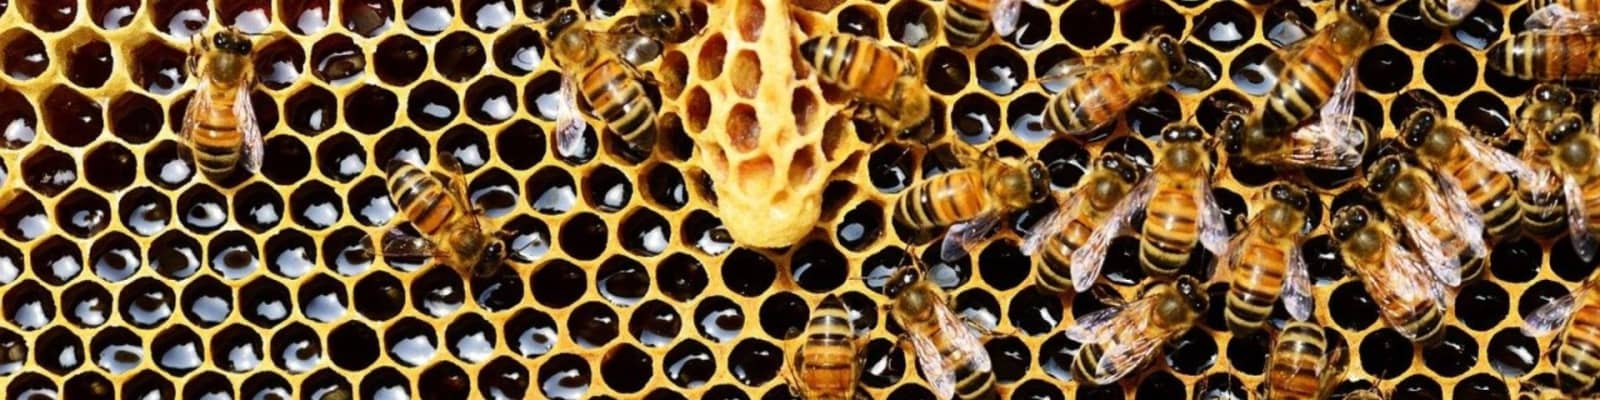 bee removals in Randburg